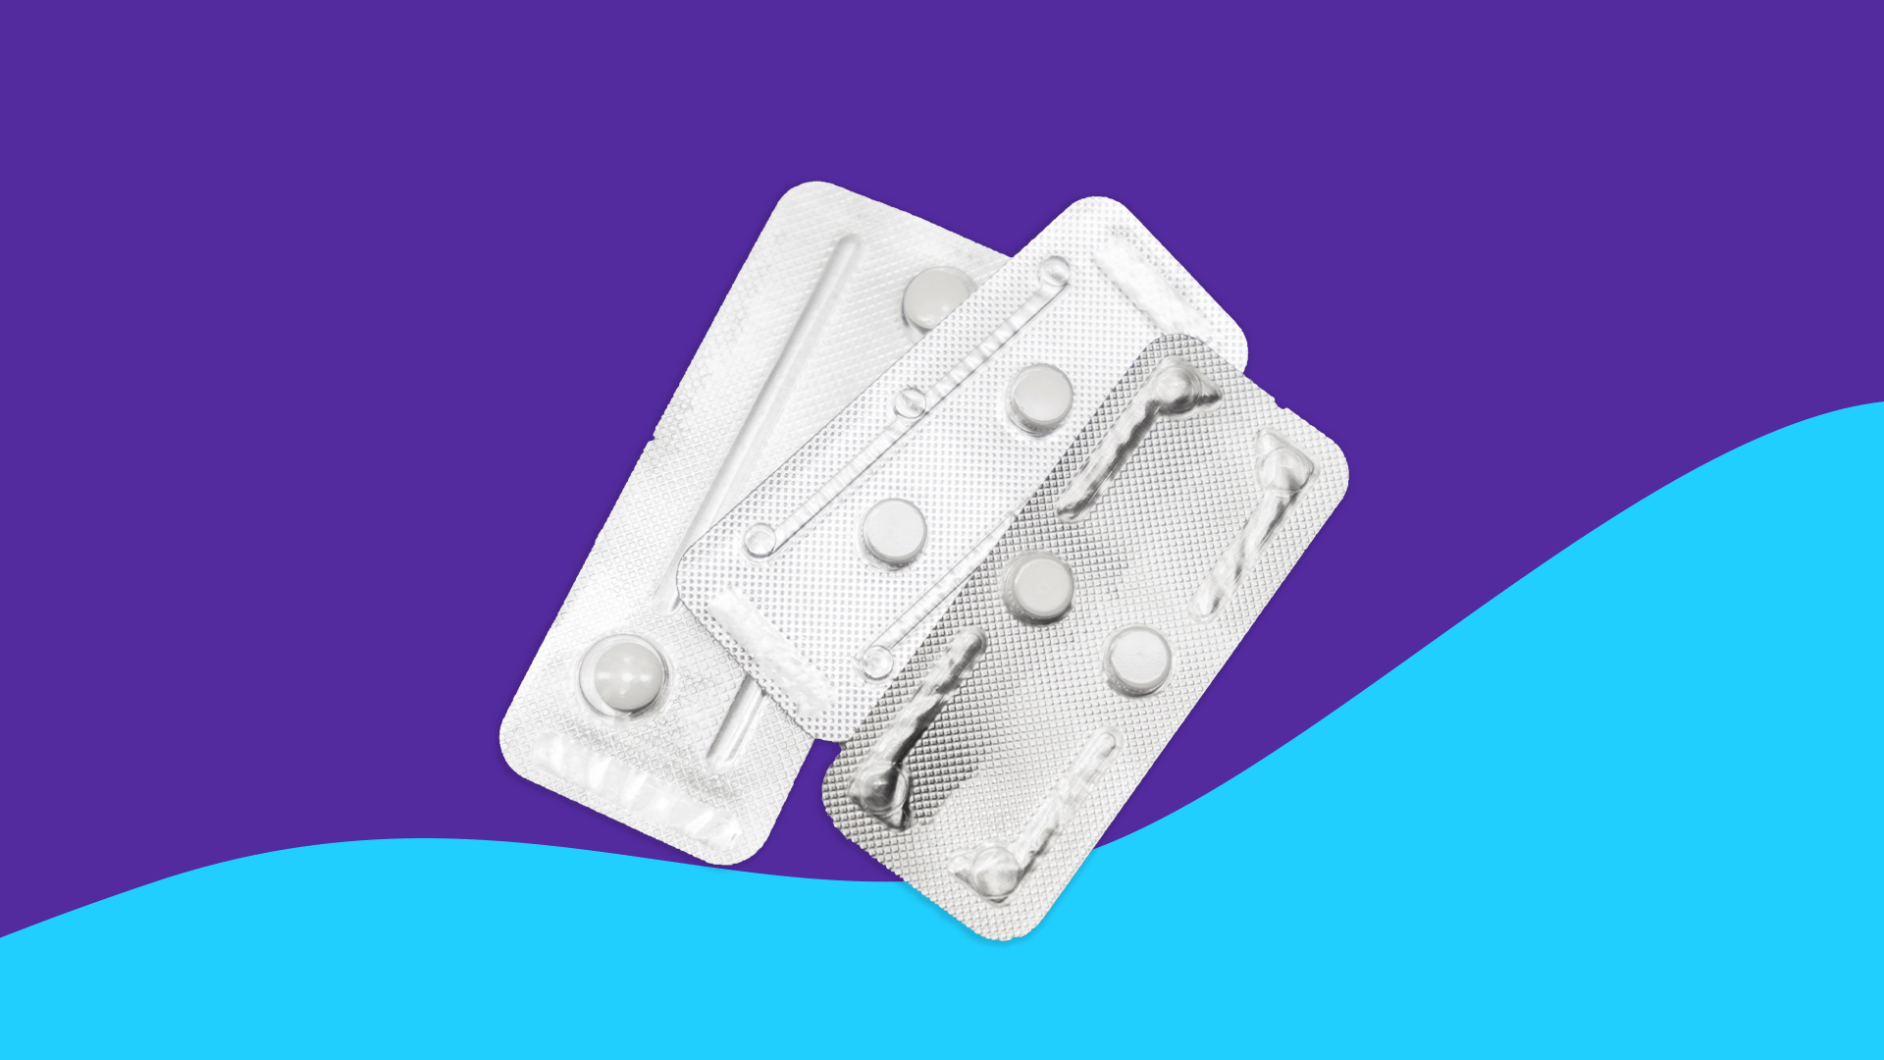 Plan B pill packets: Does Plan B make you bleed?